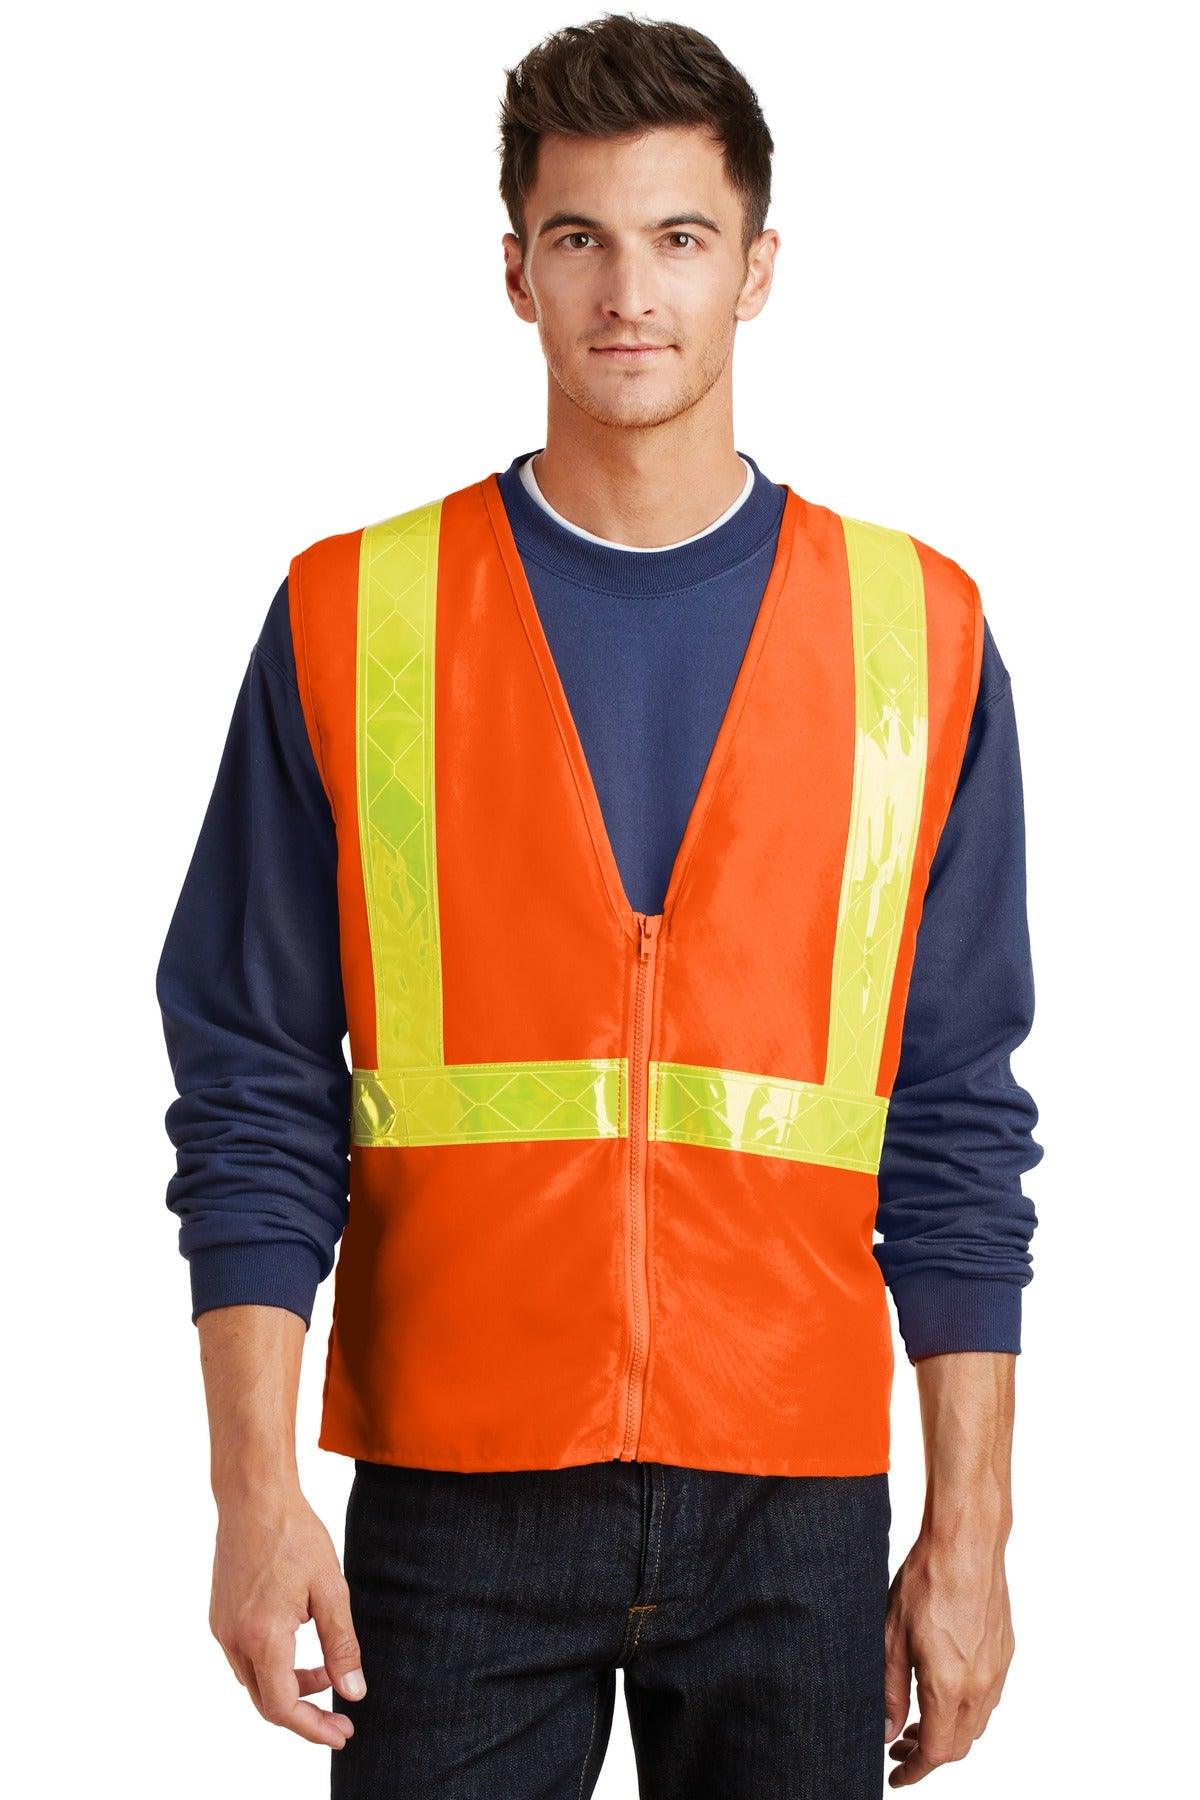 Port Authority Enhanced Visibility Vest. SV01 - Dresses Max